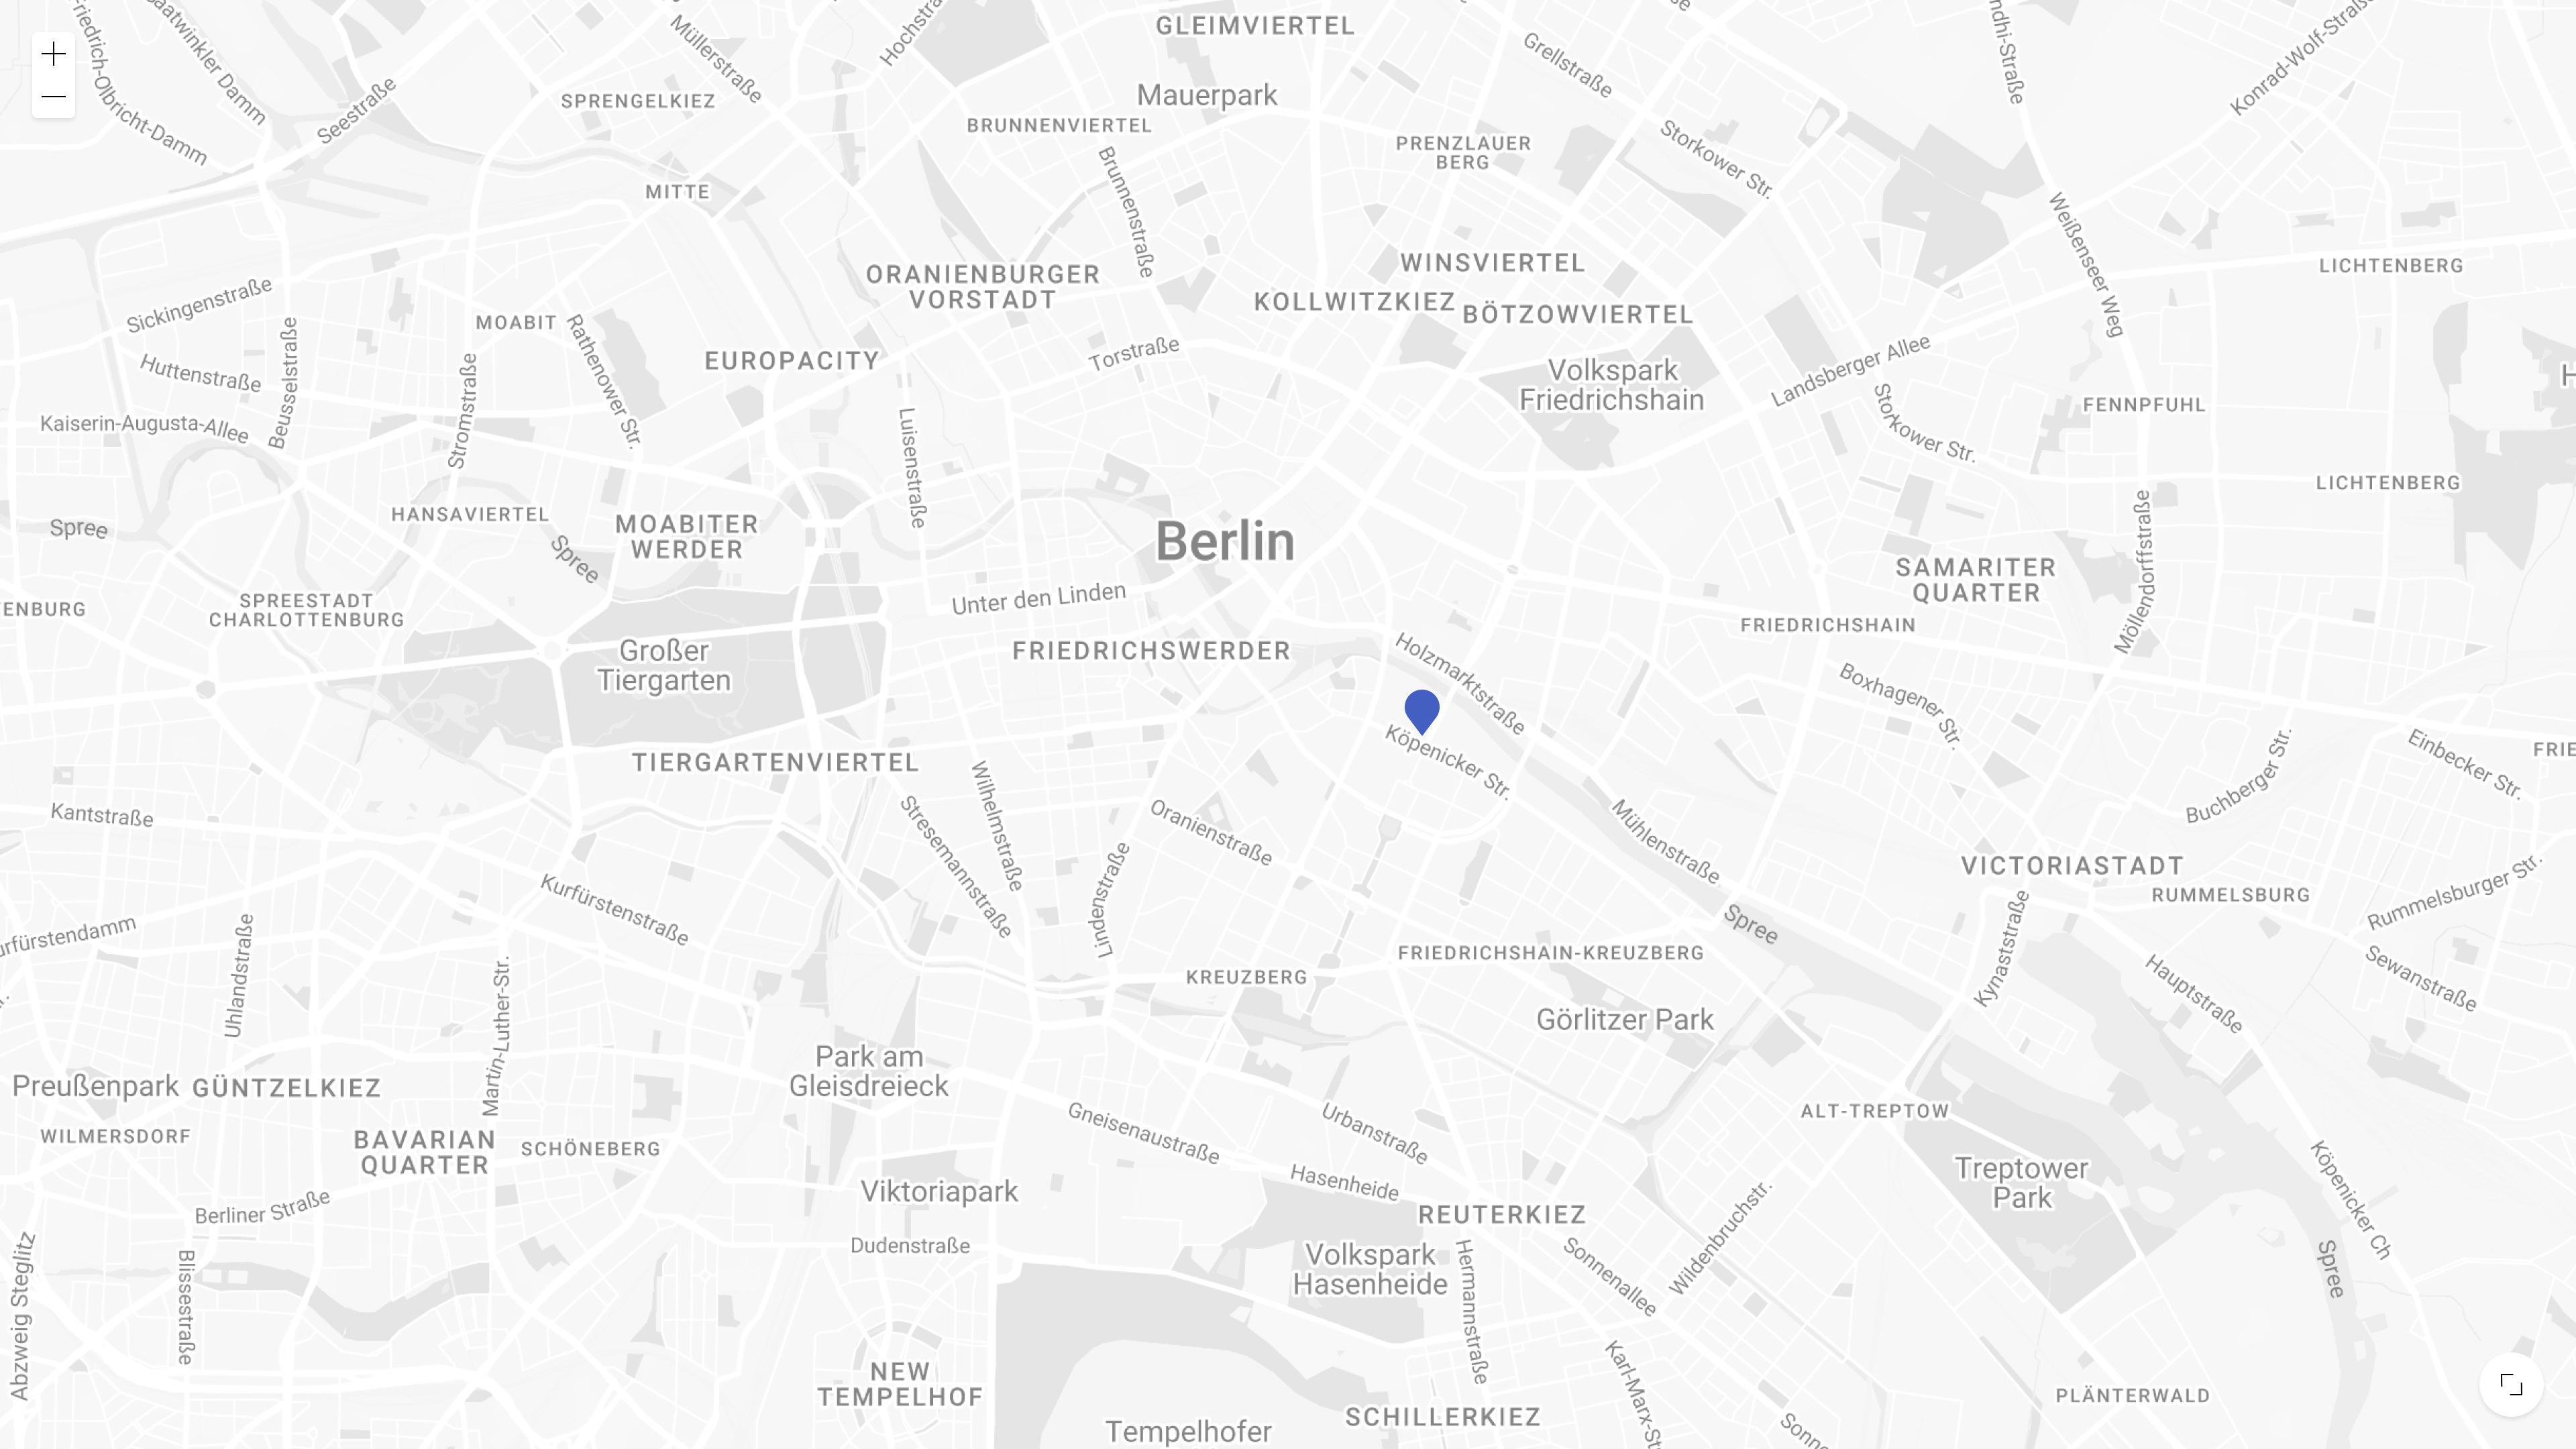 A map of Berlin